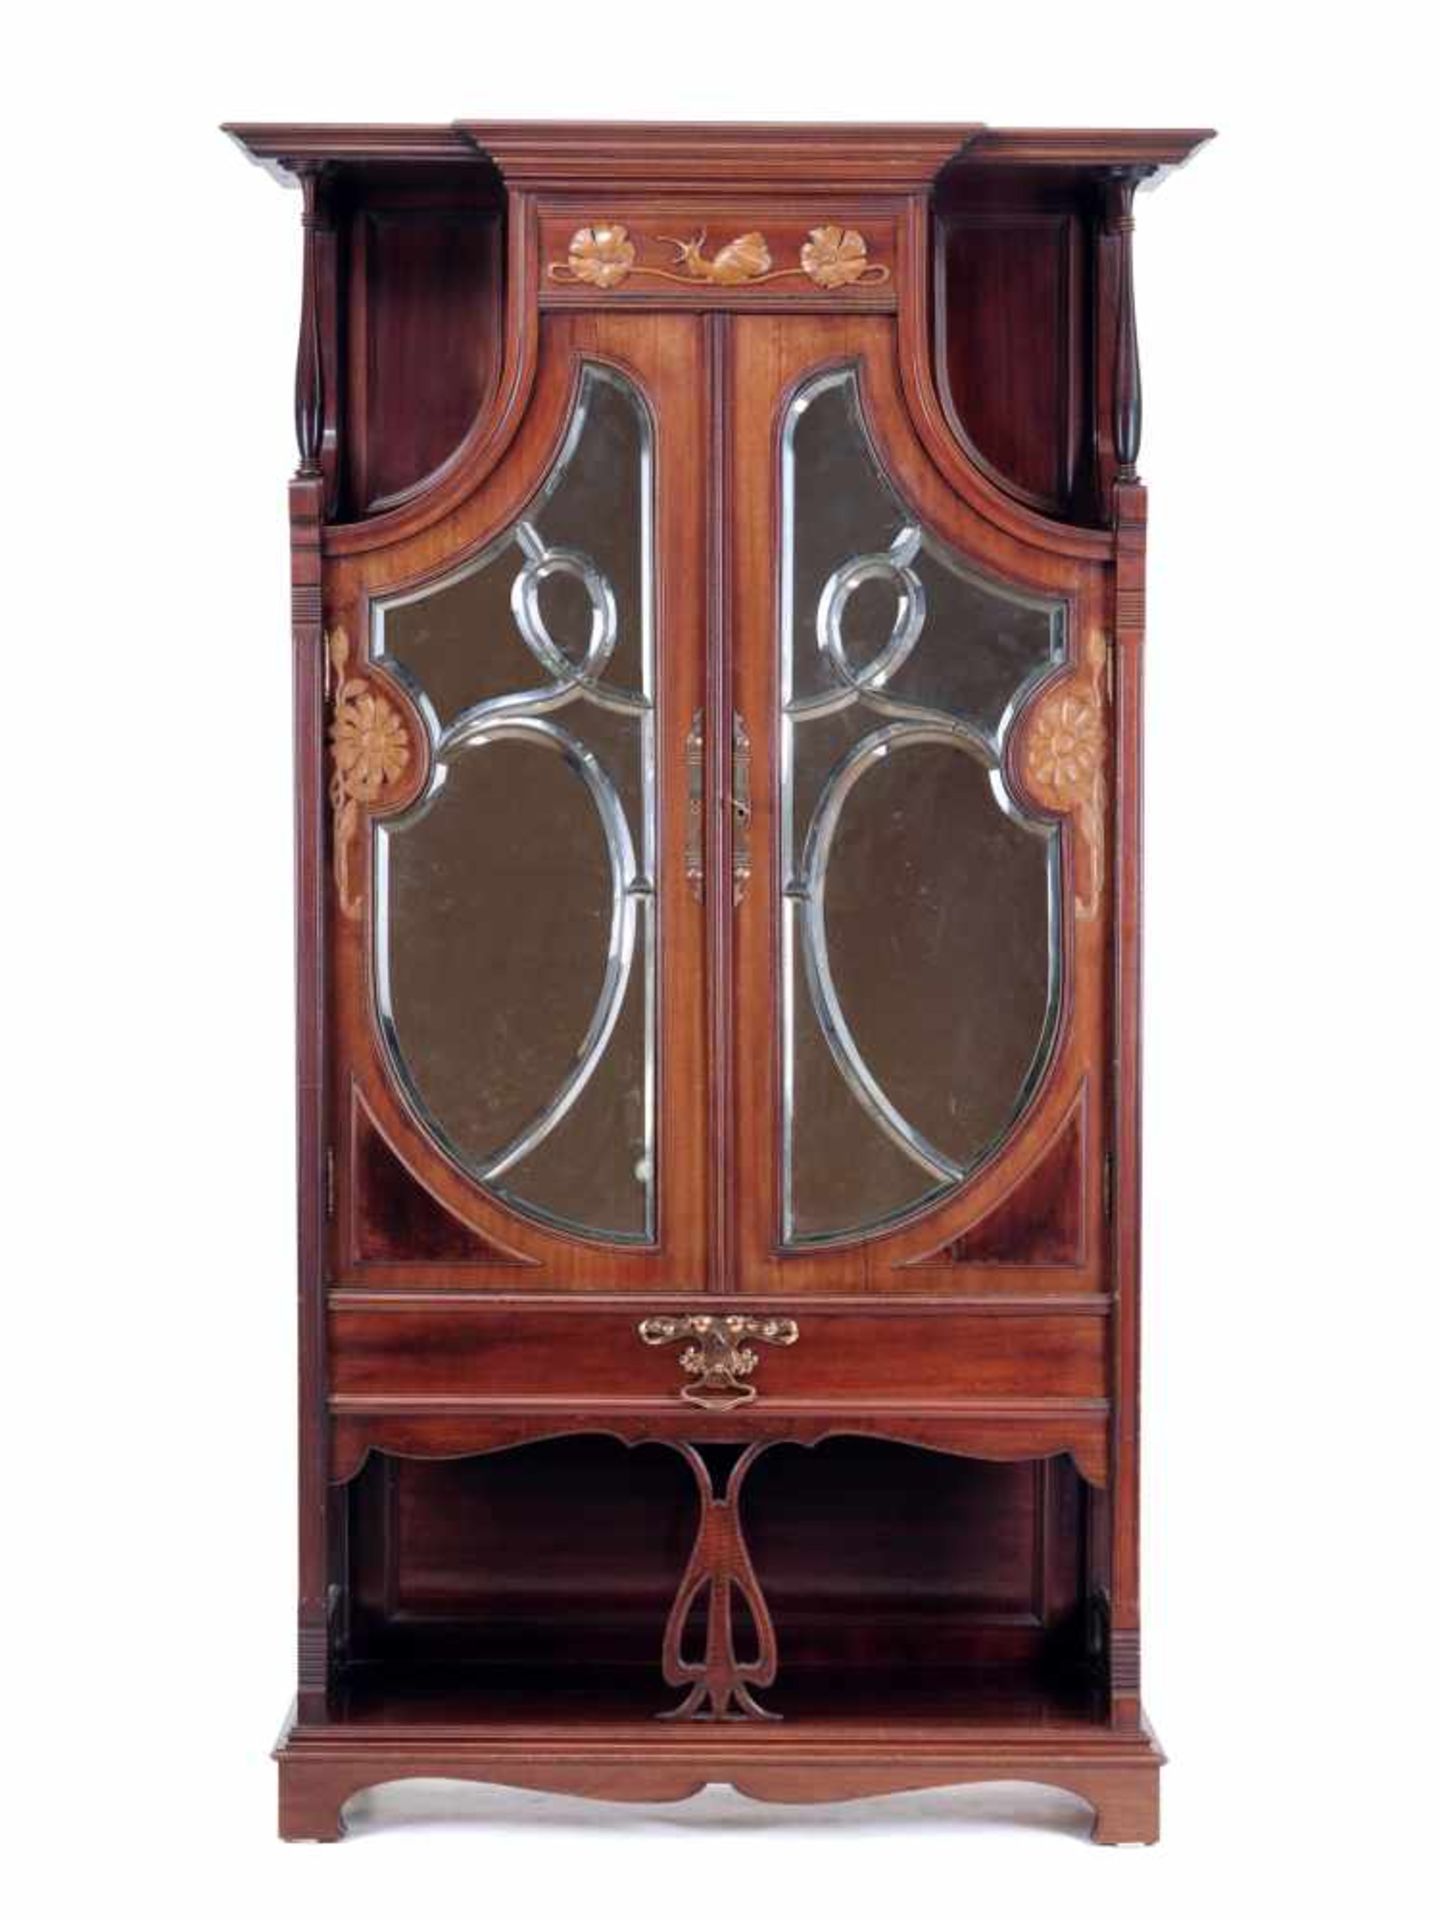 Filigraner Jugendstil-Spiegelschrank. Um 1900. Holz, mahagonifarben lackiert. Hochrechteckiger, - Bild 2 aus 4